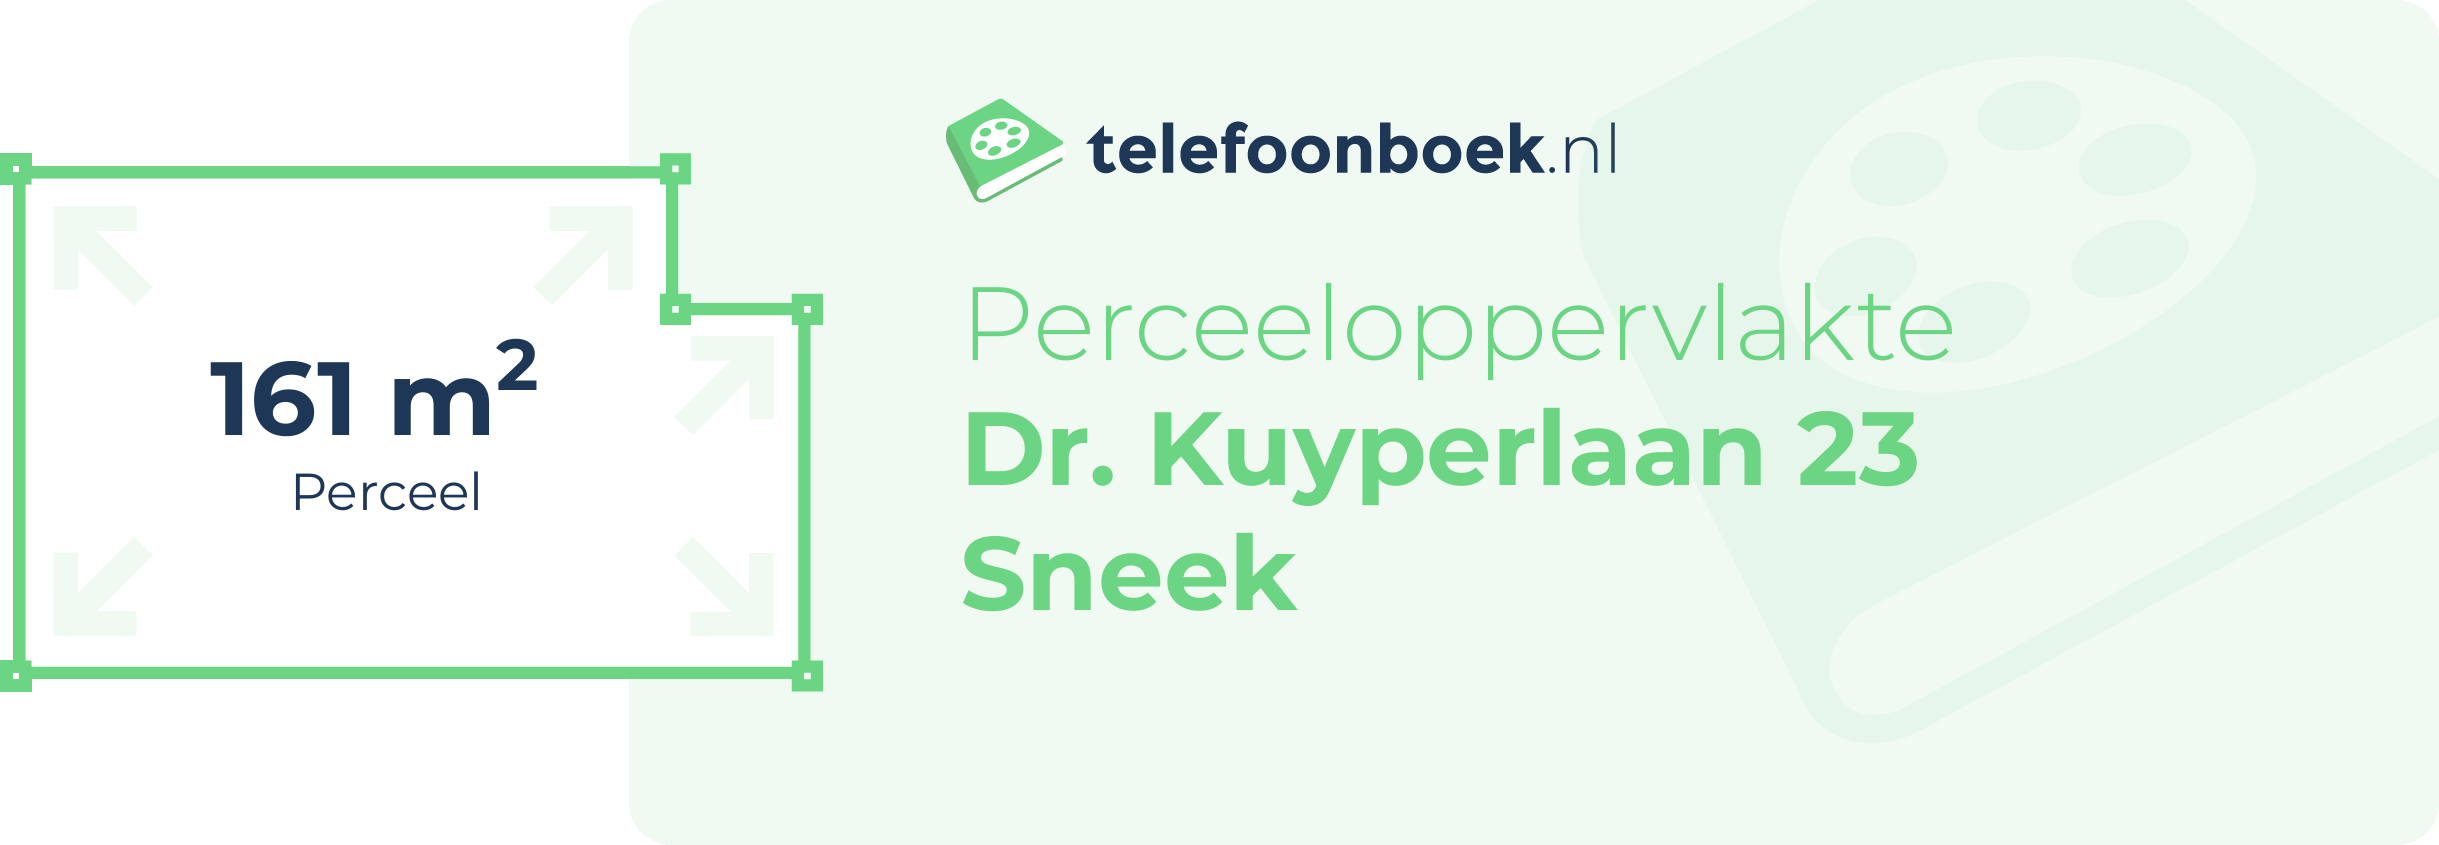 Perceeloppervlakte Dr. Kuyperlaan 23 Sneek